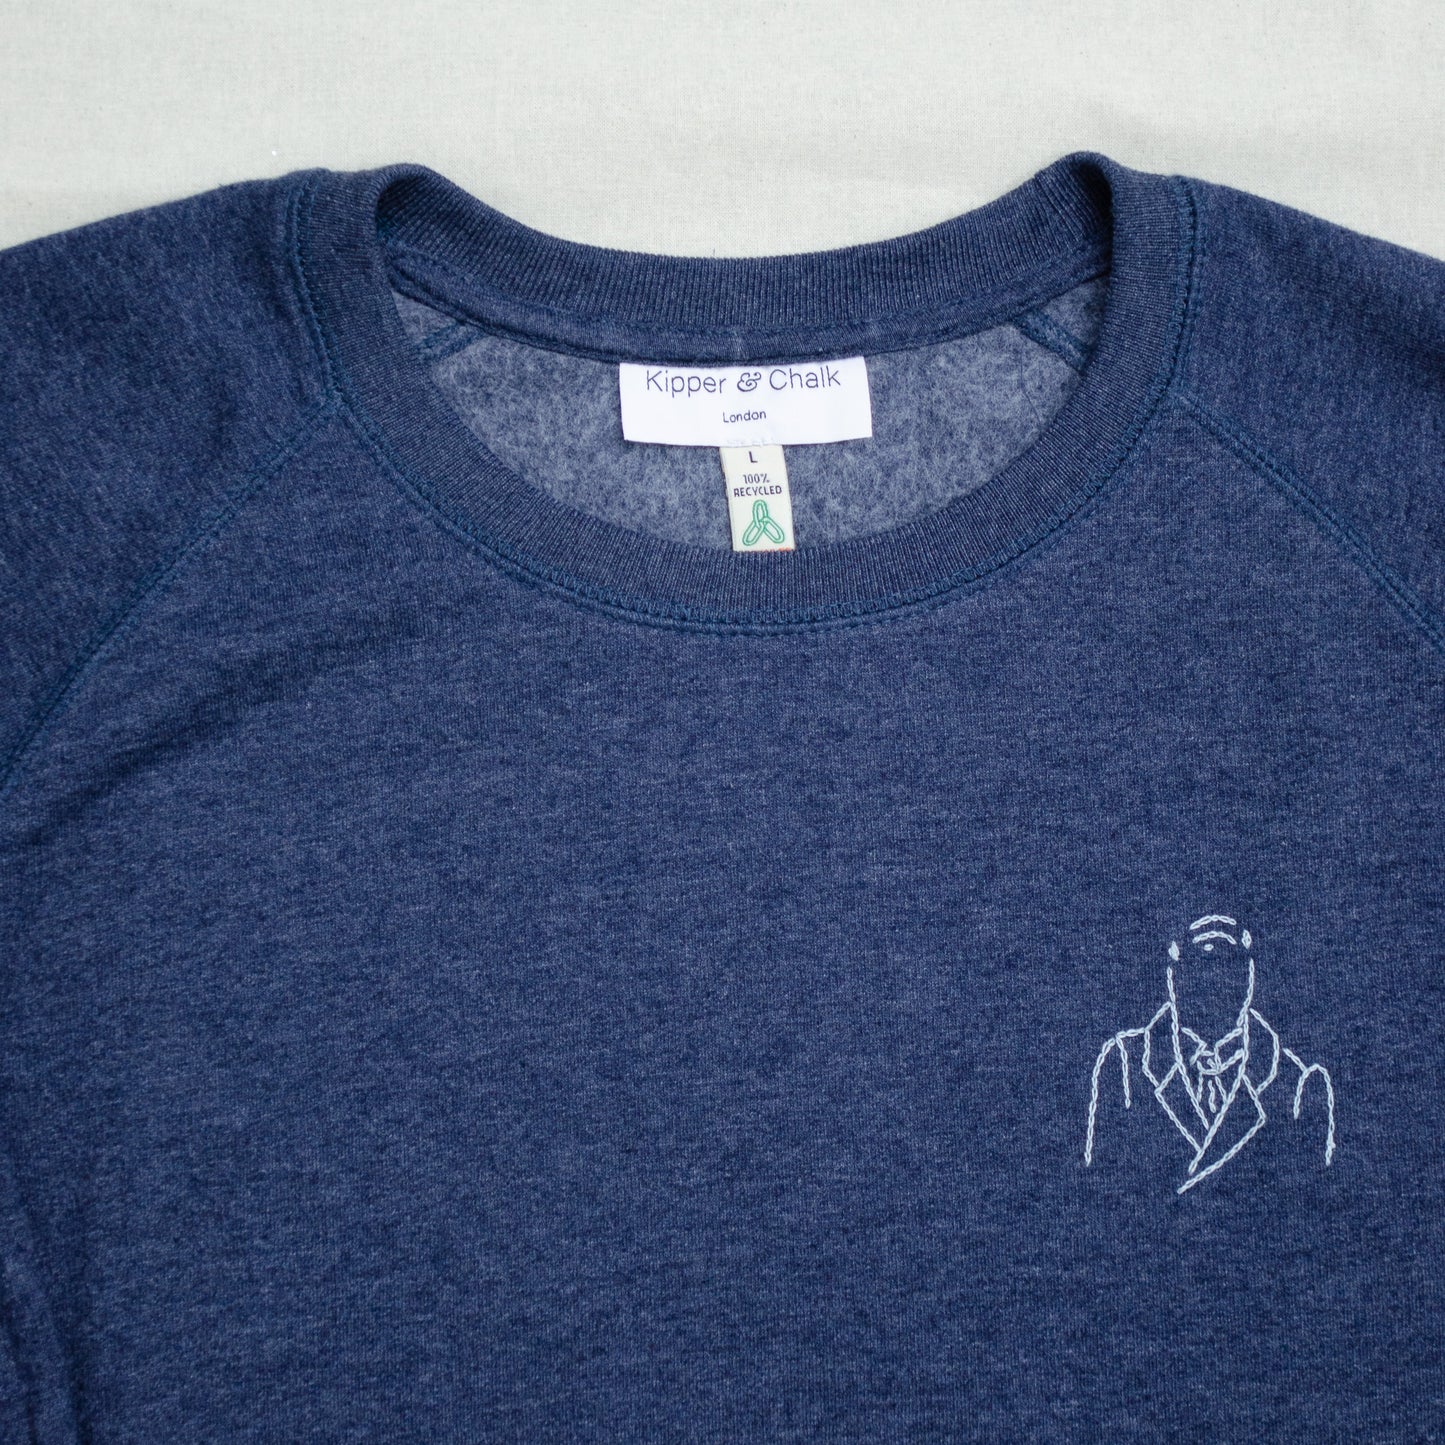 Embroidered Sweatshirt - Navy